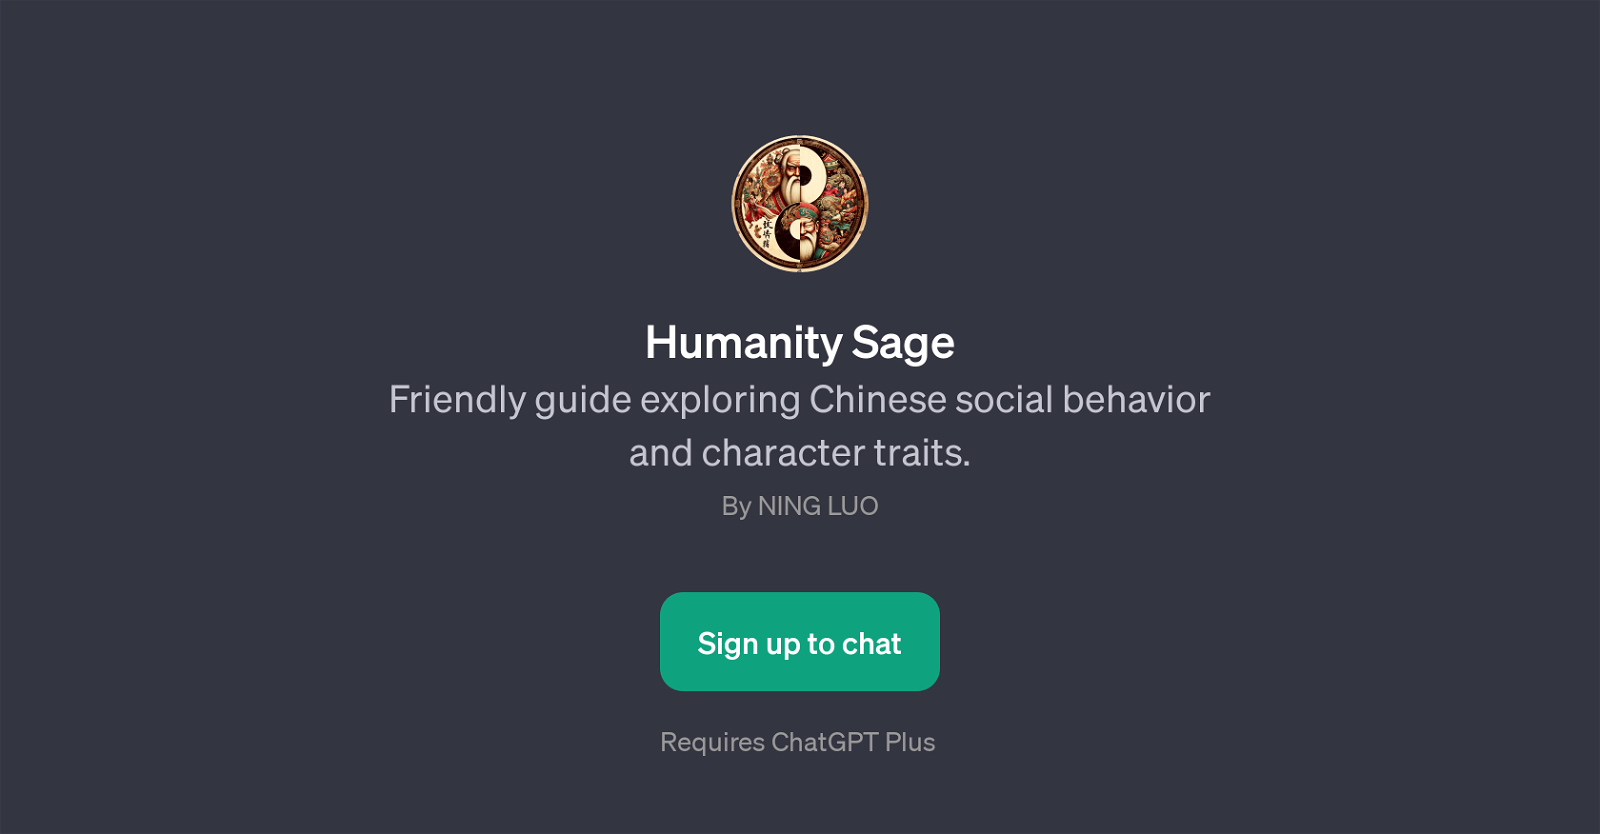 Humanity Sage website